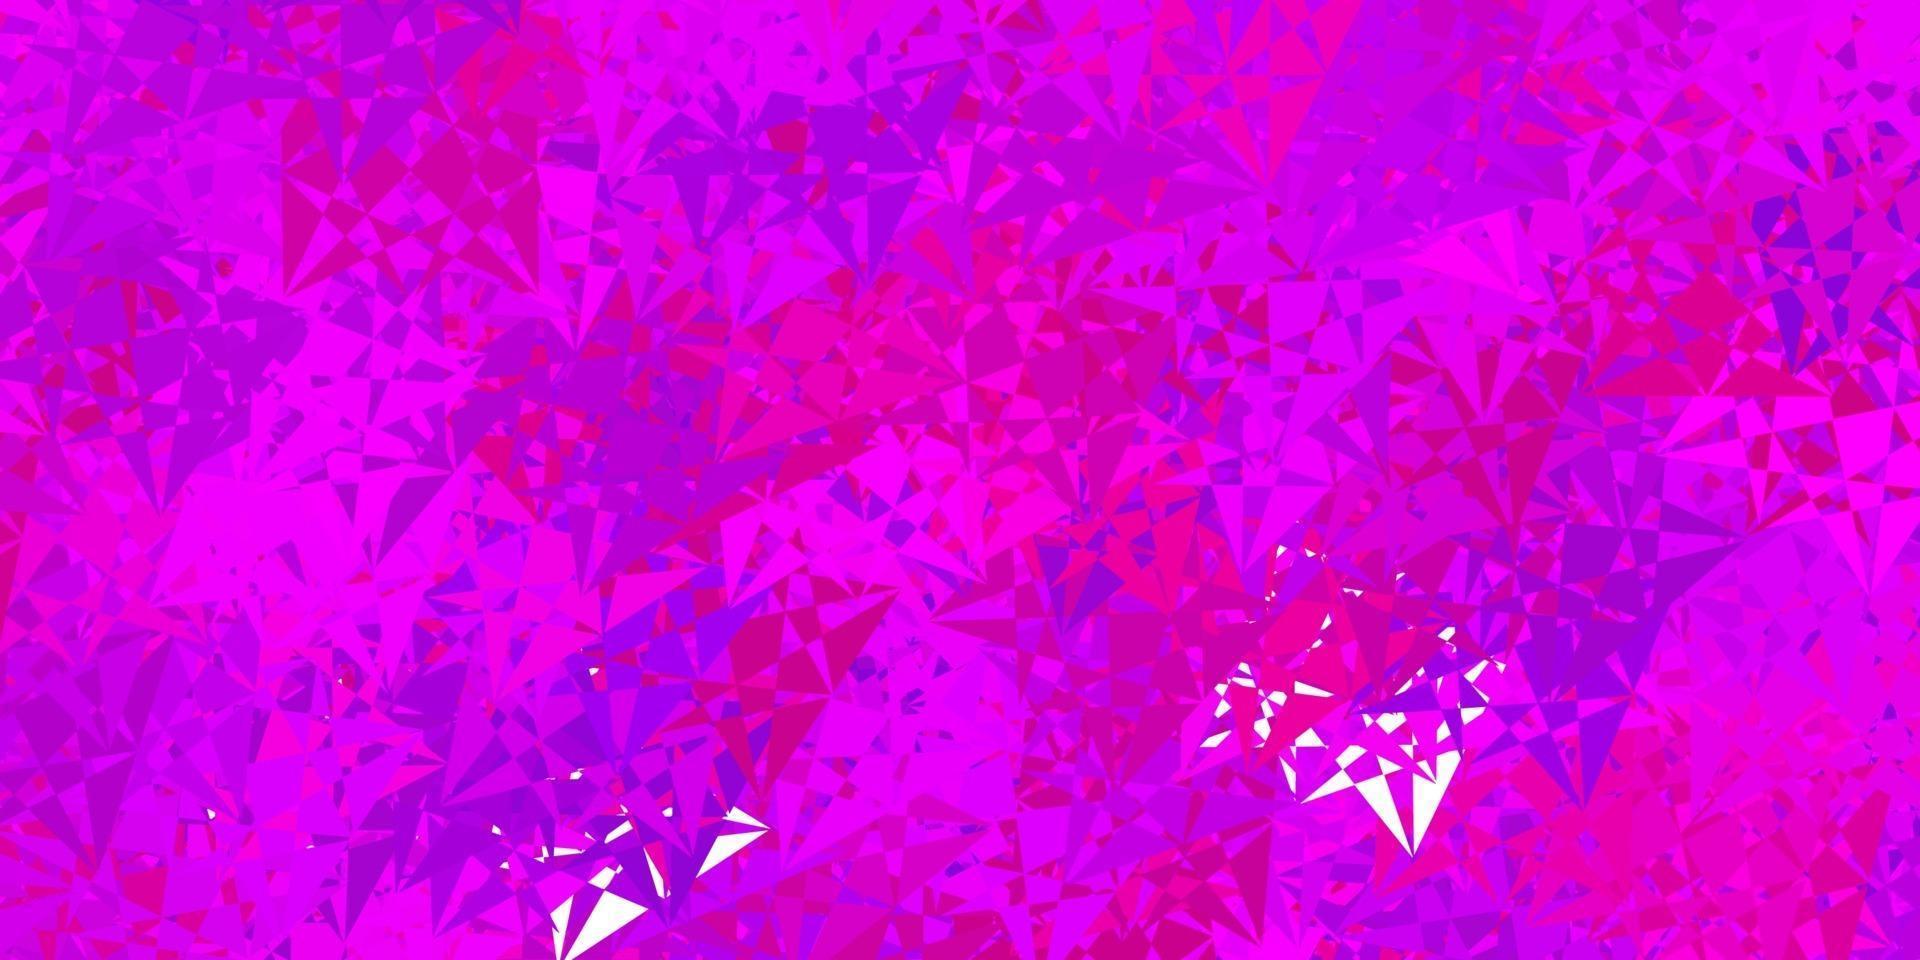 diseño vectorial de color rosa oscuro, azul con formas triangulares. vector